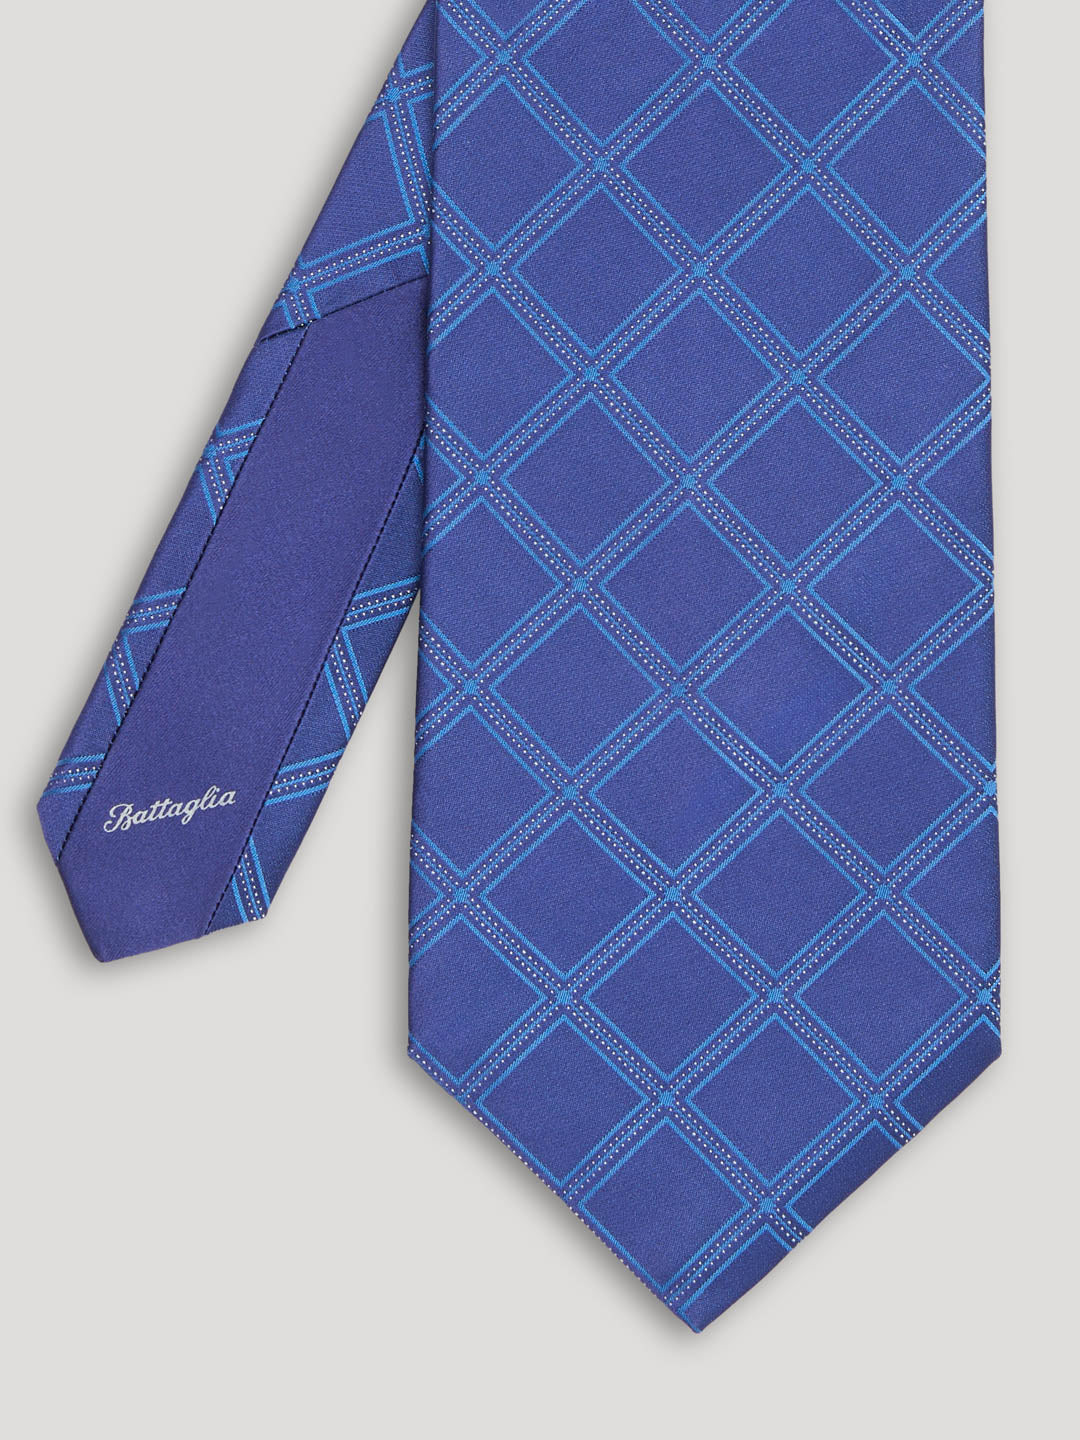 Blue diamond design tie.  